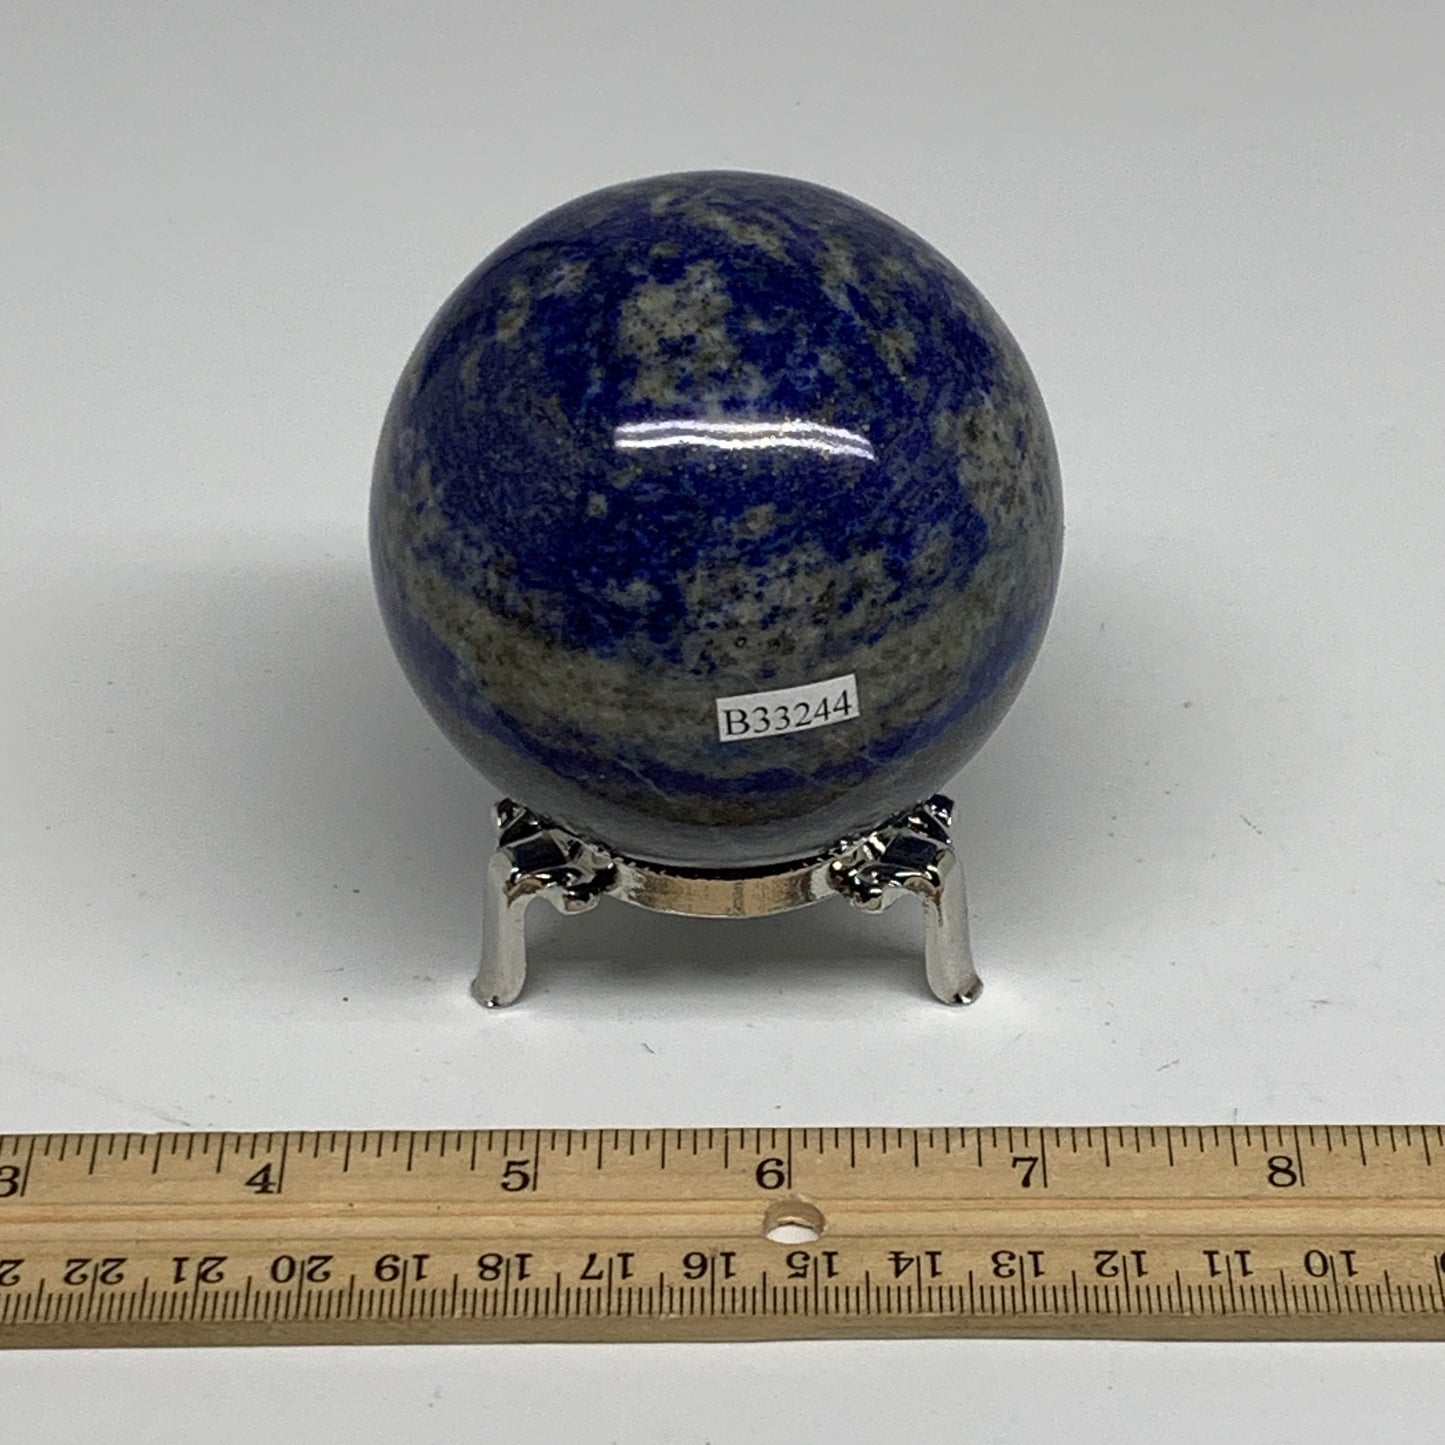 1.22 lbs, 2.8" (70mm), Lapis Lazuli Sphere Ball Gemstone @Afghanistan, B33244